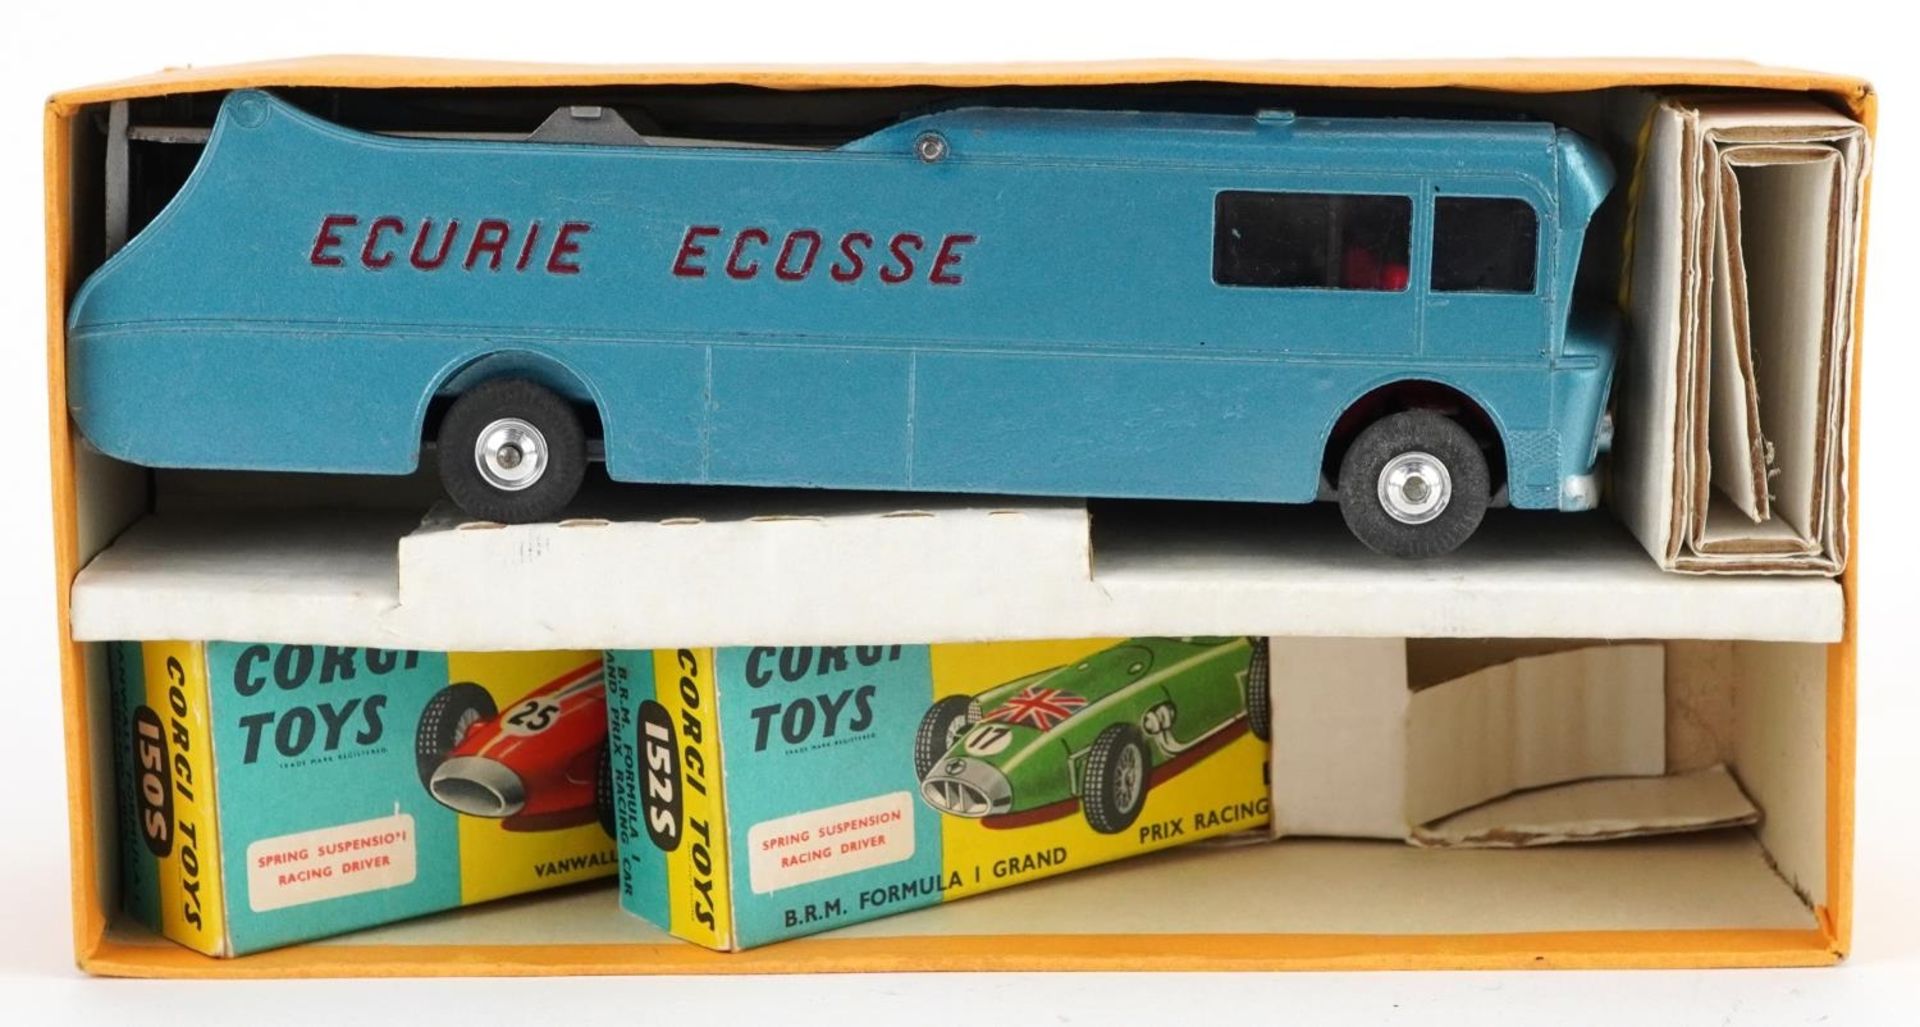 Vintage Corgi Major diecast Ecurie Ecosse racing car transporter with racing cars, gift set no 16 - Image 6 of 6